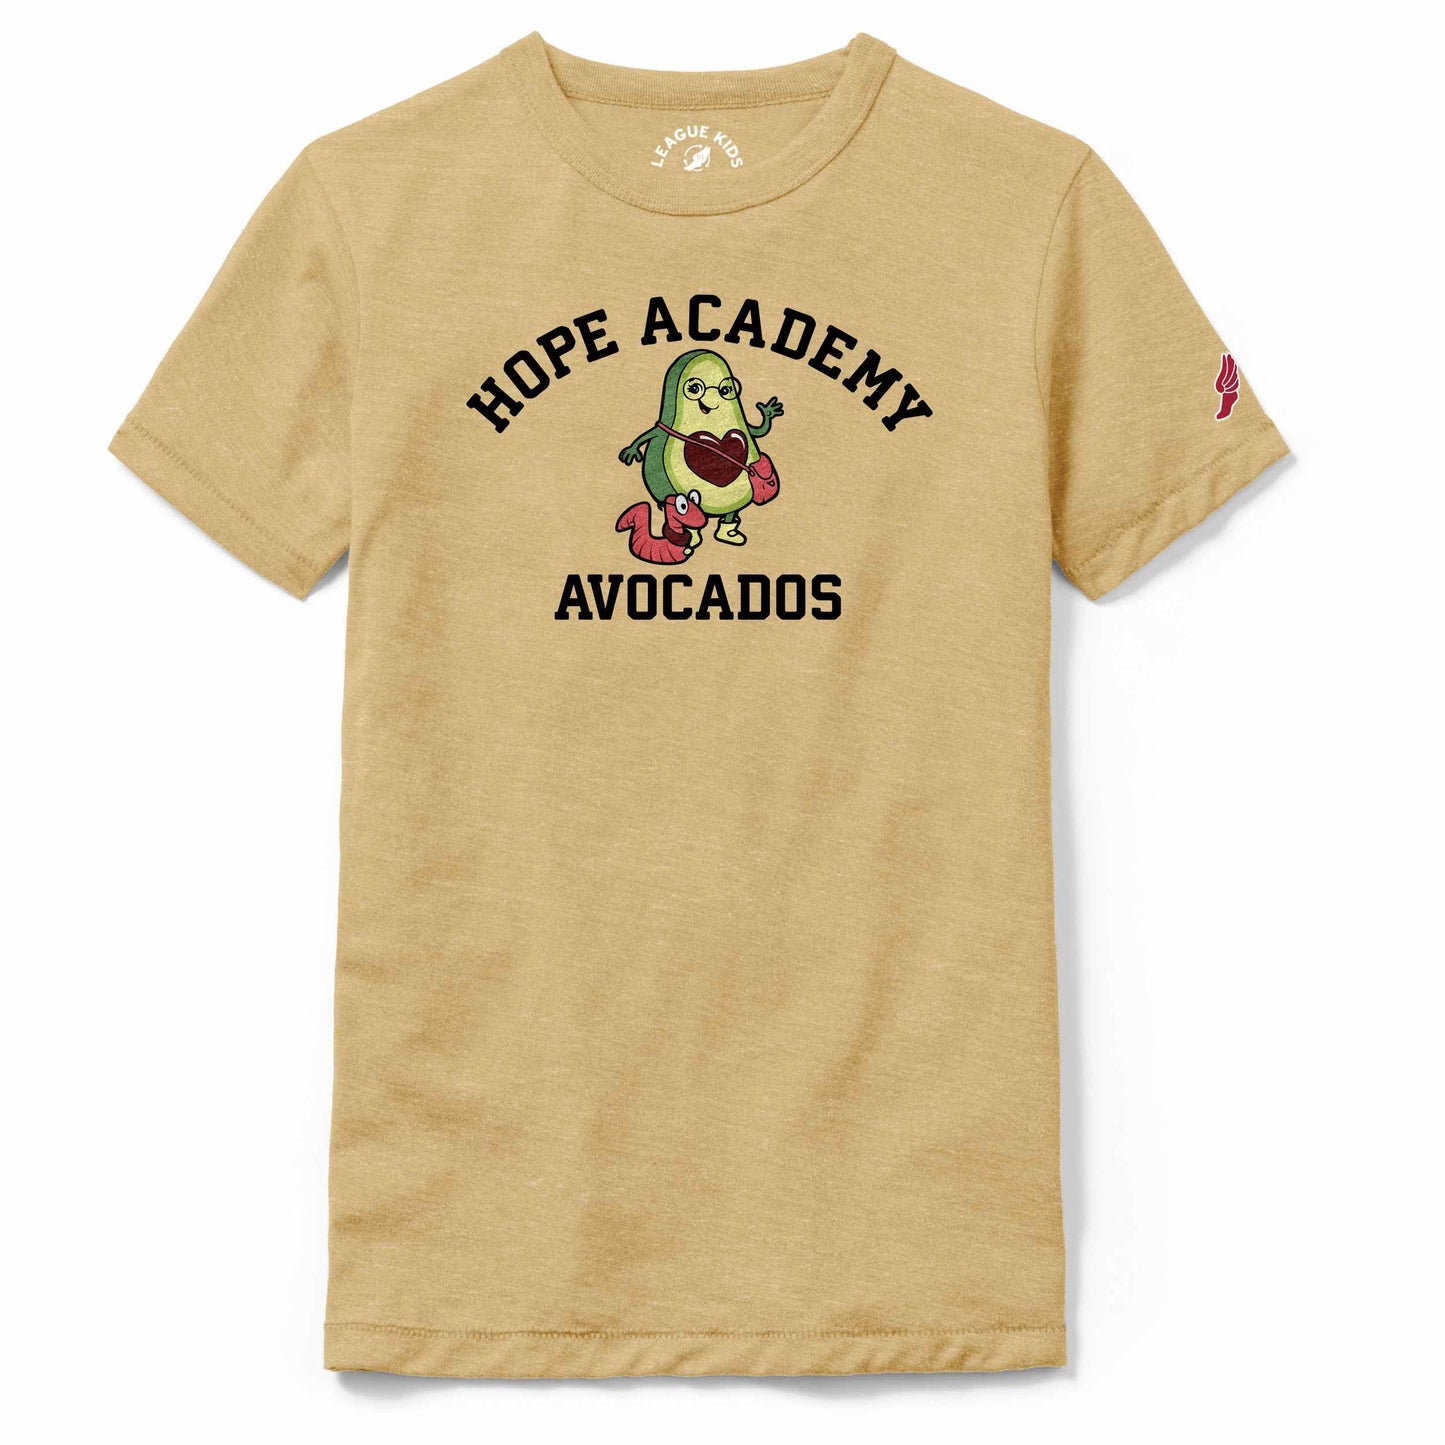 Hope Academy Youth Tri-Blend Tee